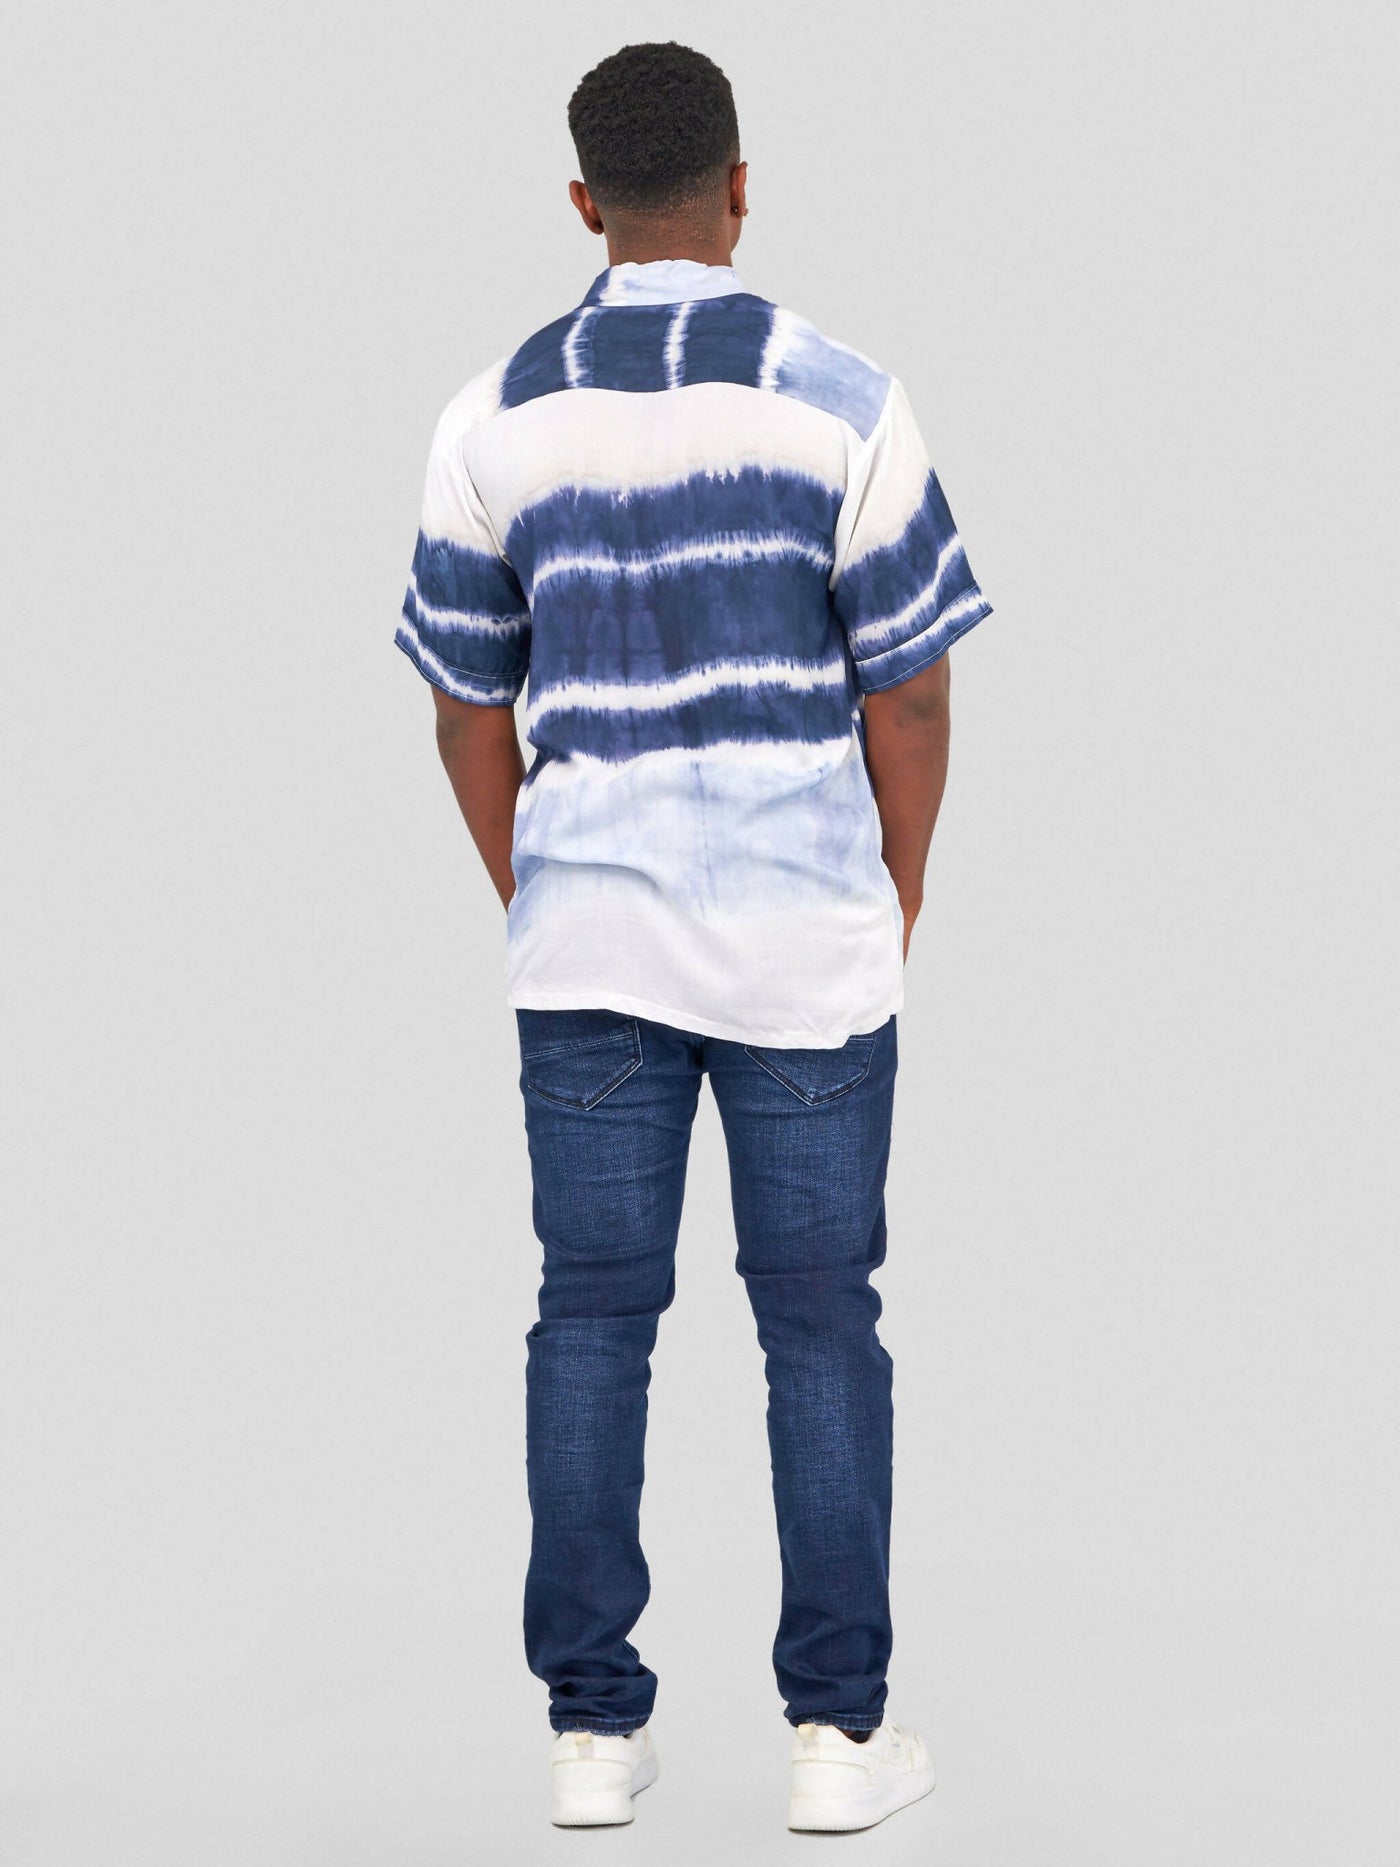 Vazi Afriq Tie & Dye Normal Collar Shirt - Navy Blue / White - Shopzetu